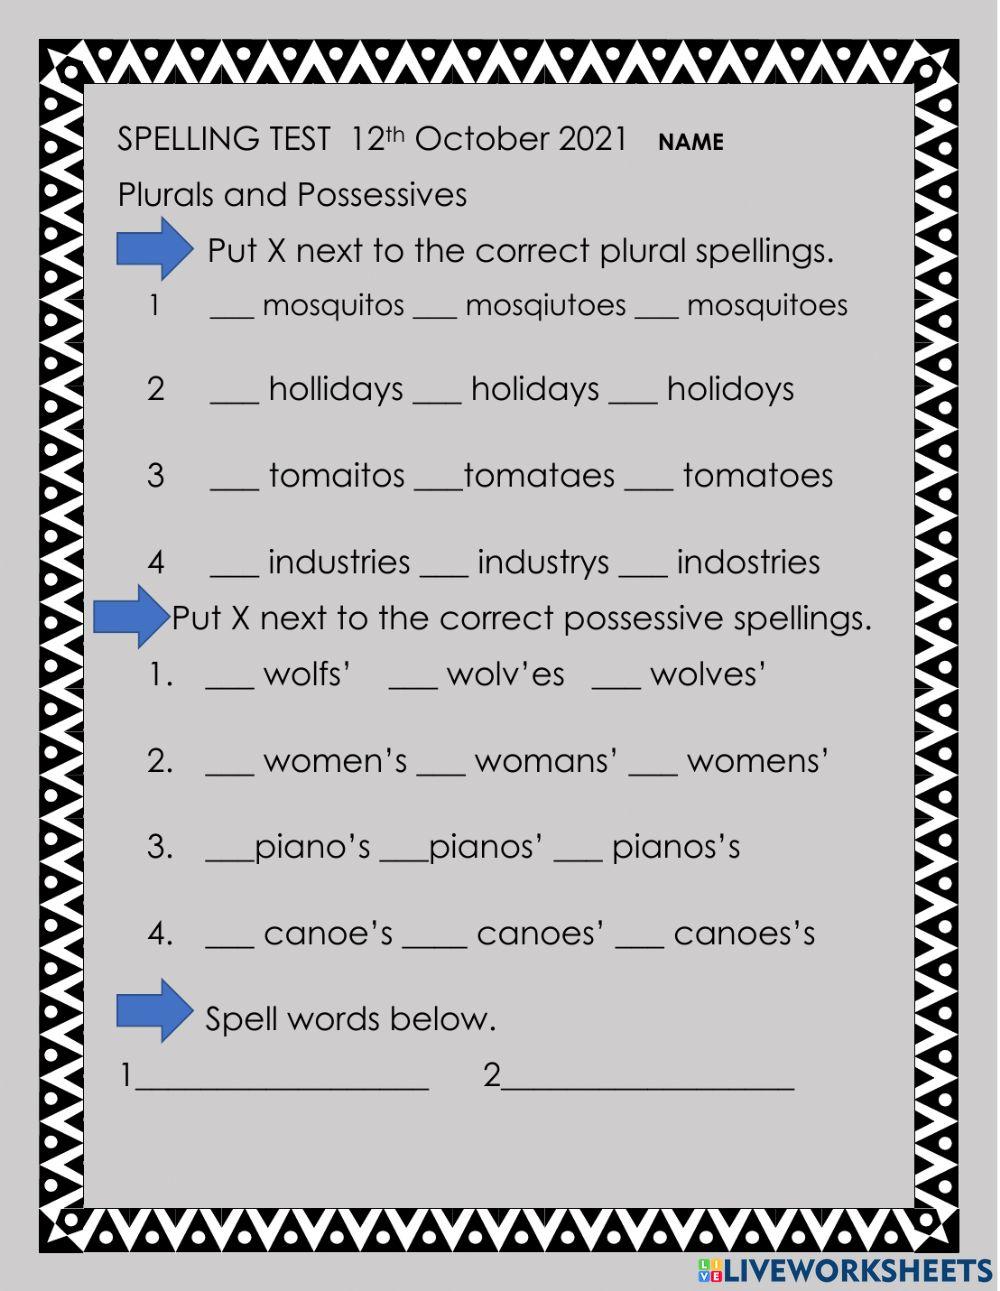 Plurals and possessive Spelling test